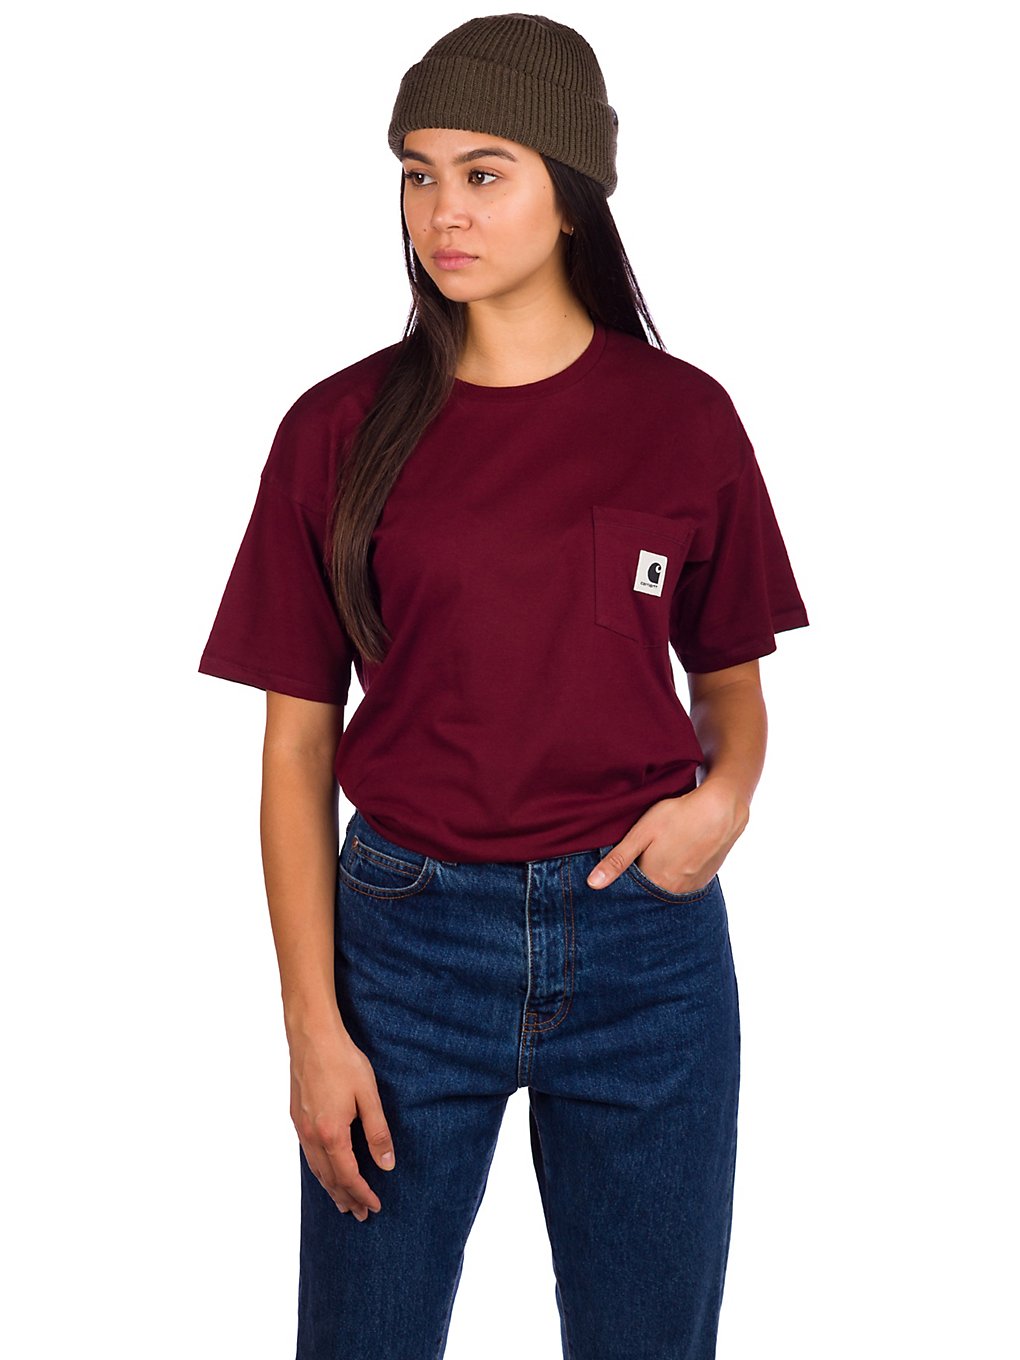 Carhartt WIP Carrie Pocket T-Shirt bordeaux